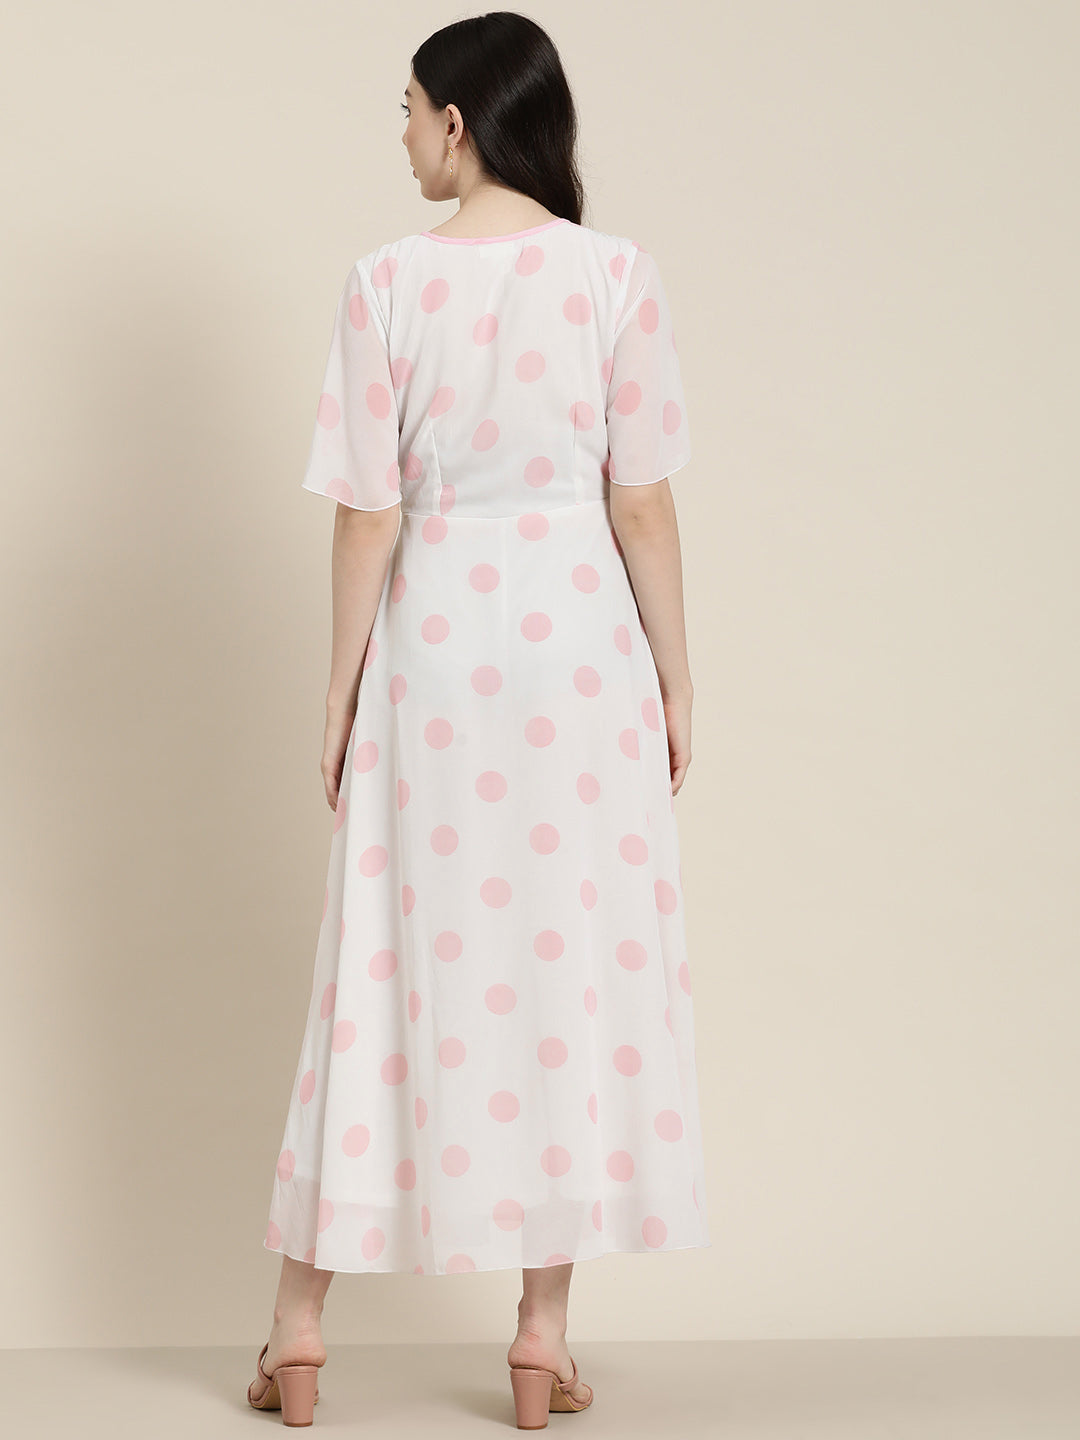 White with big Pink polka summer dress